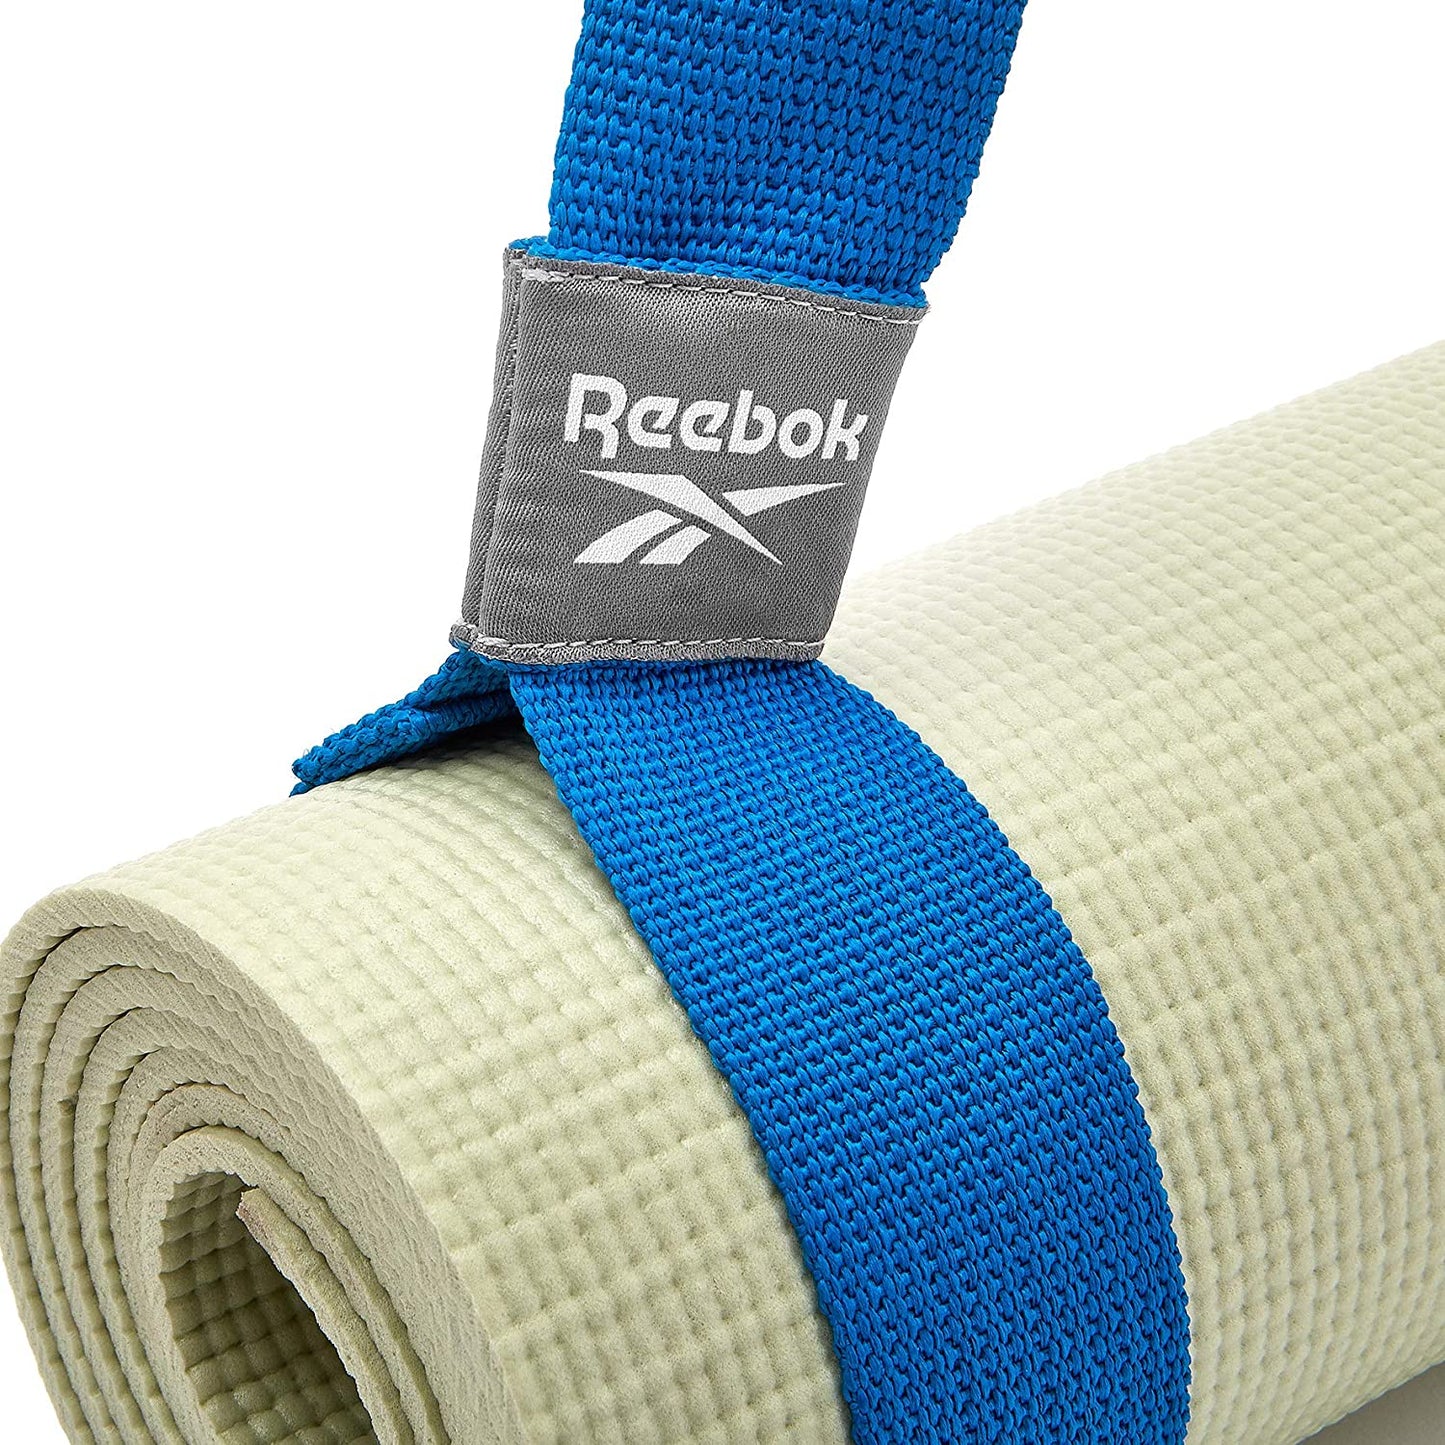 Reebok Yoga Mat Strap - Best Price online Prokicksports.com